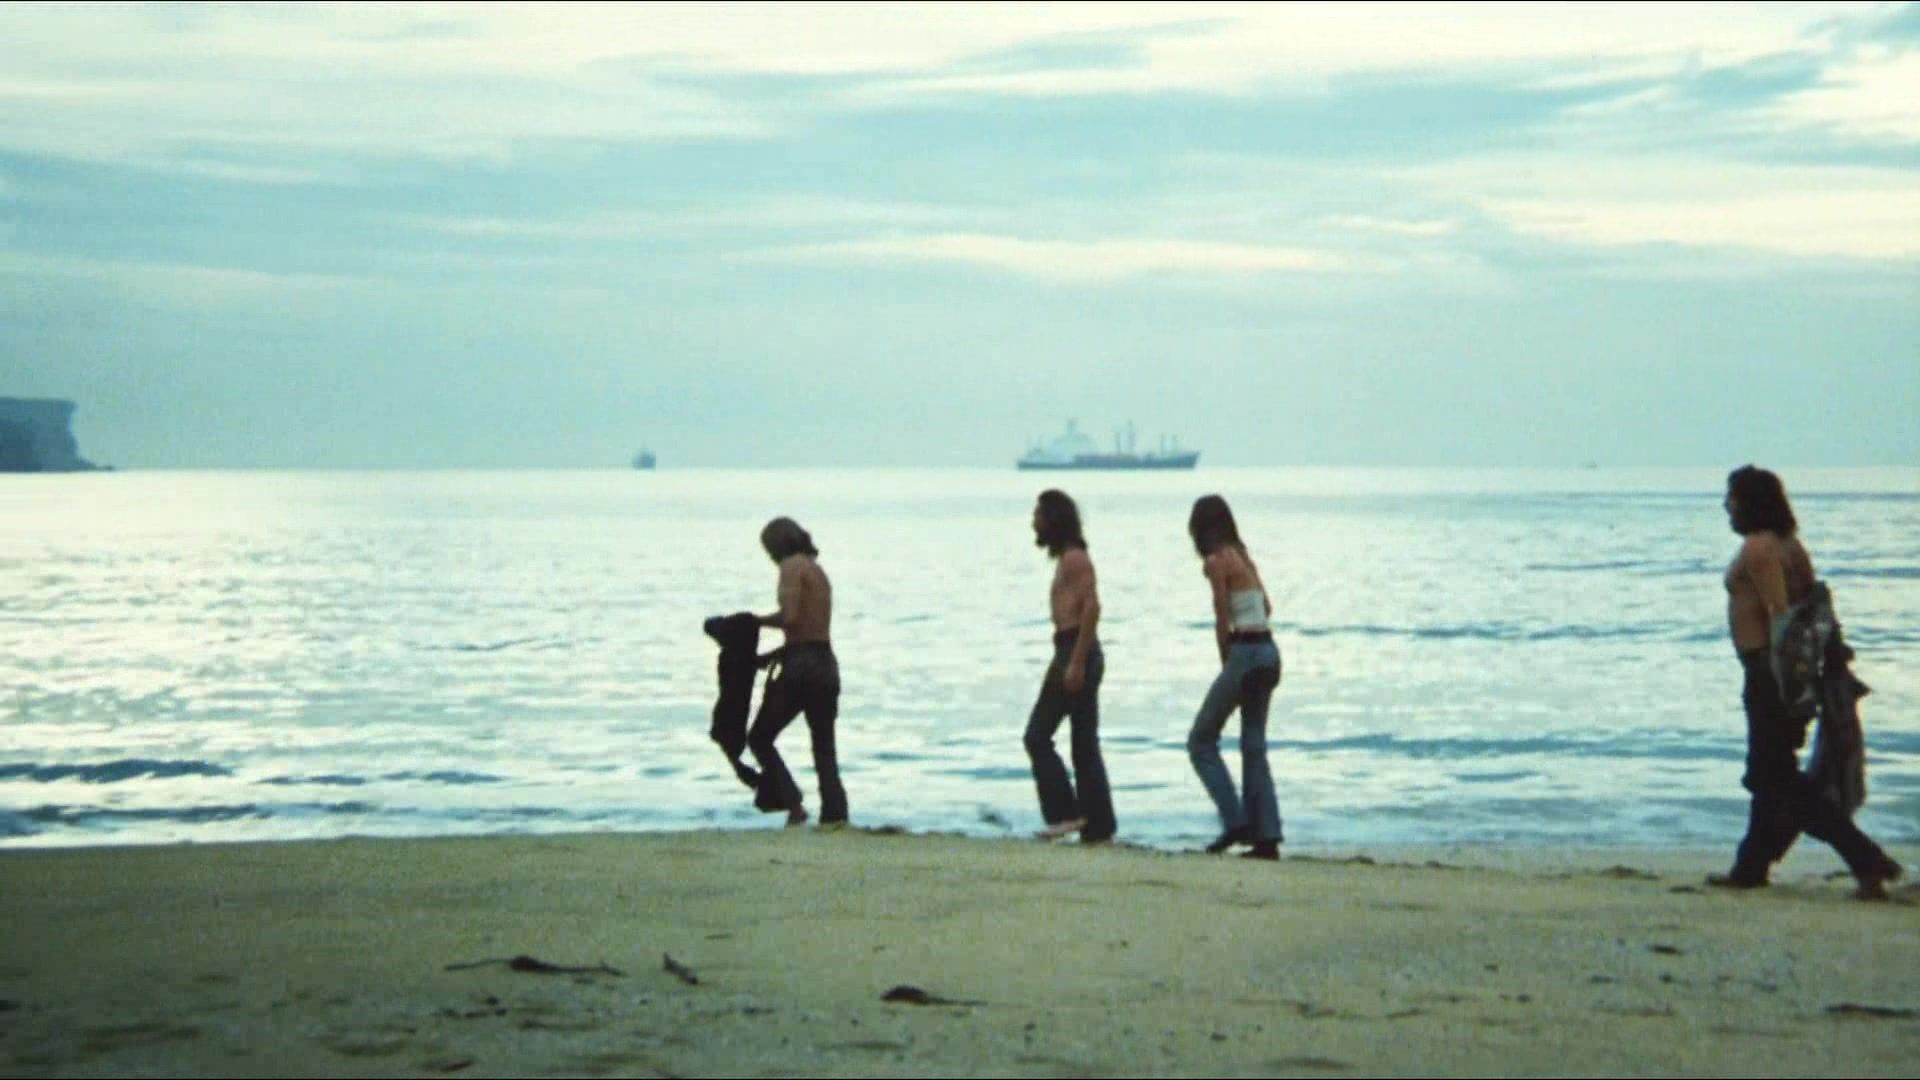 Uniform Classic Erotic Film "Stone" (1974) Deflowered